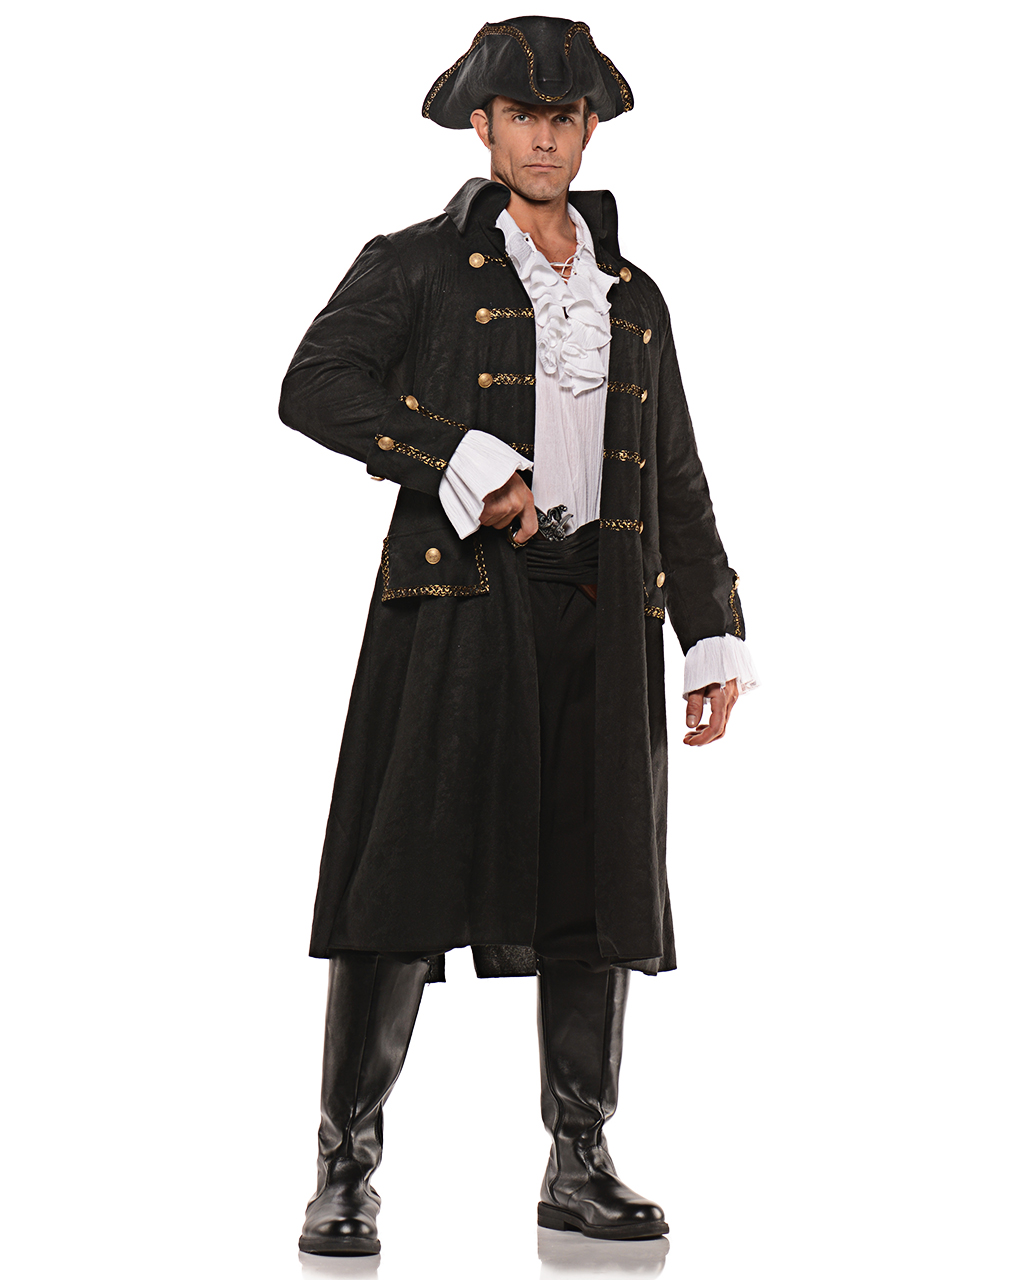 Piraten Kapitän Herren Verkleidung Kostüm 